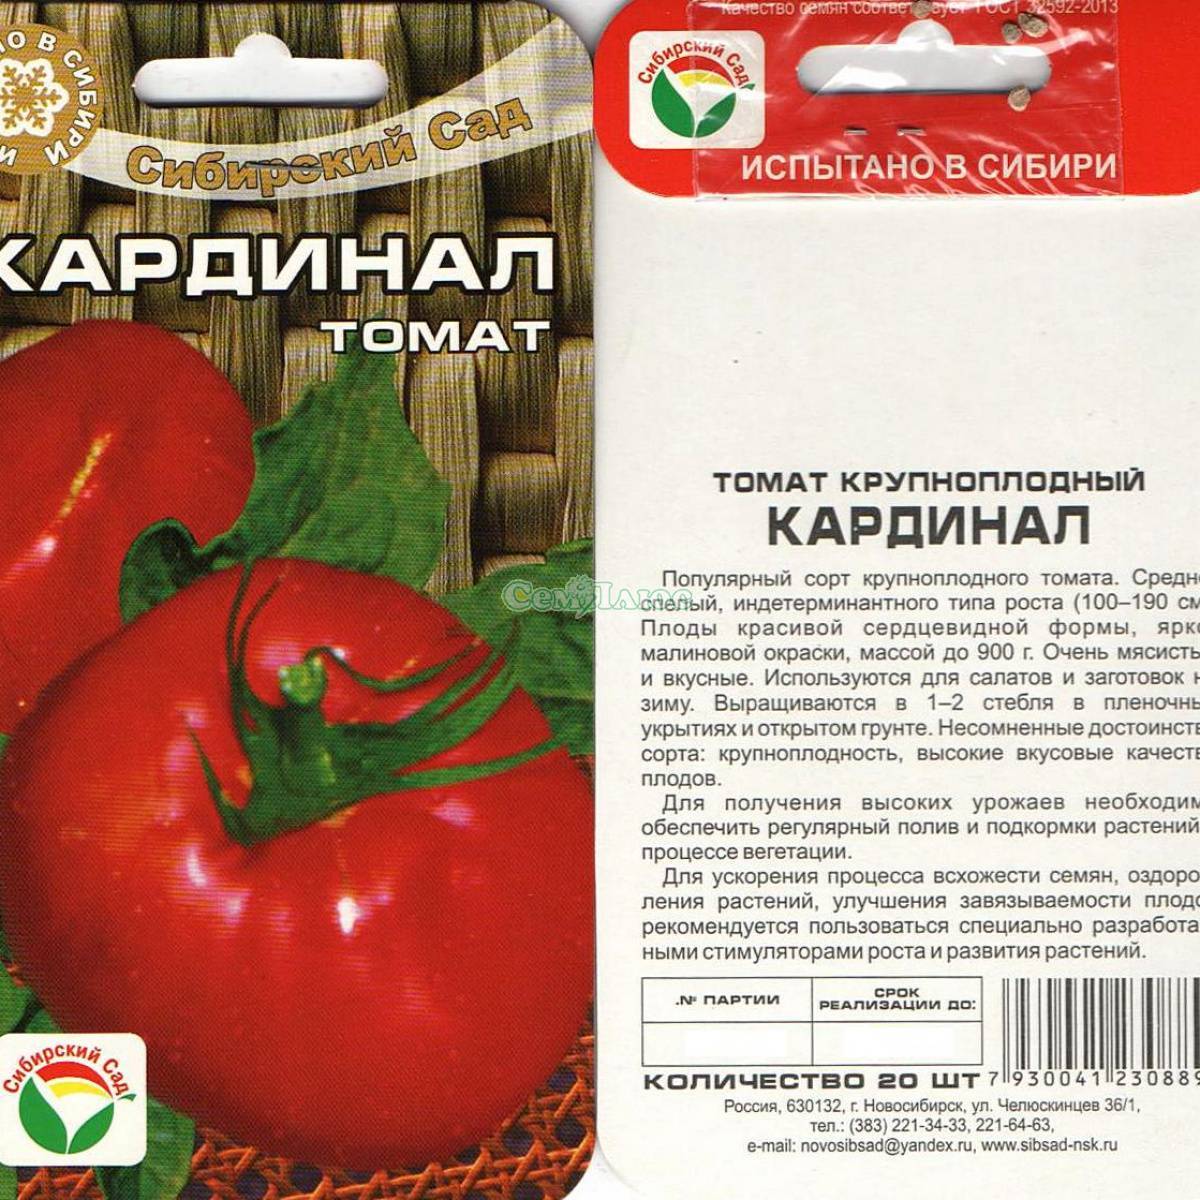 Томат бонанза характеристика и описание сорта maksiflora.ru